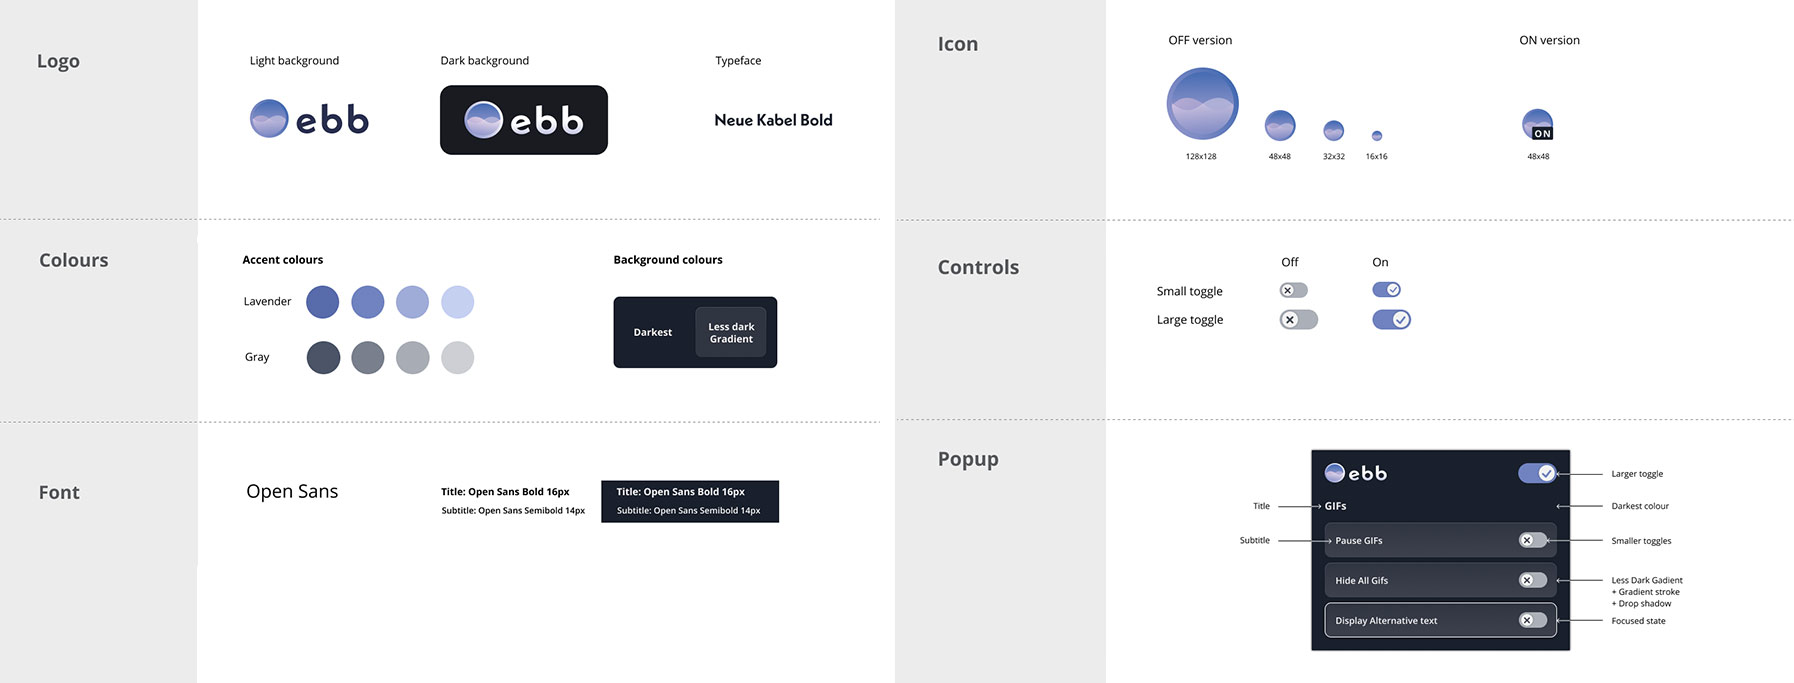 ebb simple Design System: colours, fonts, logo